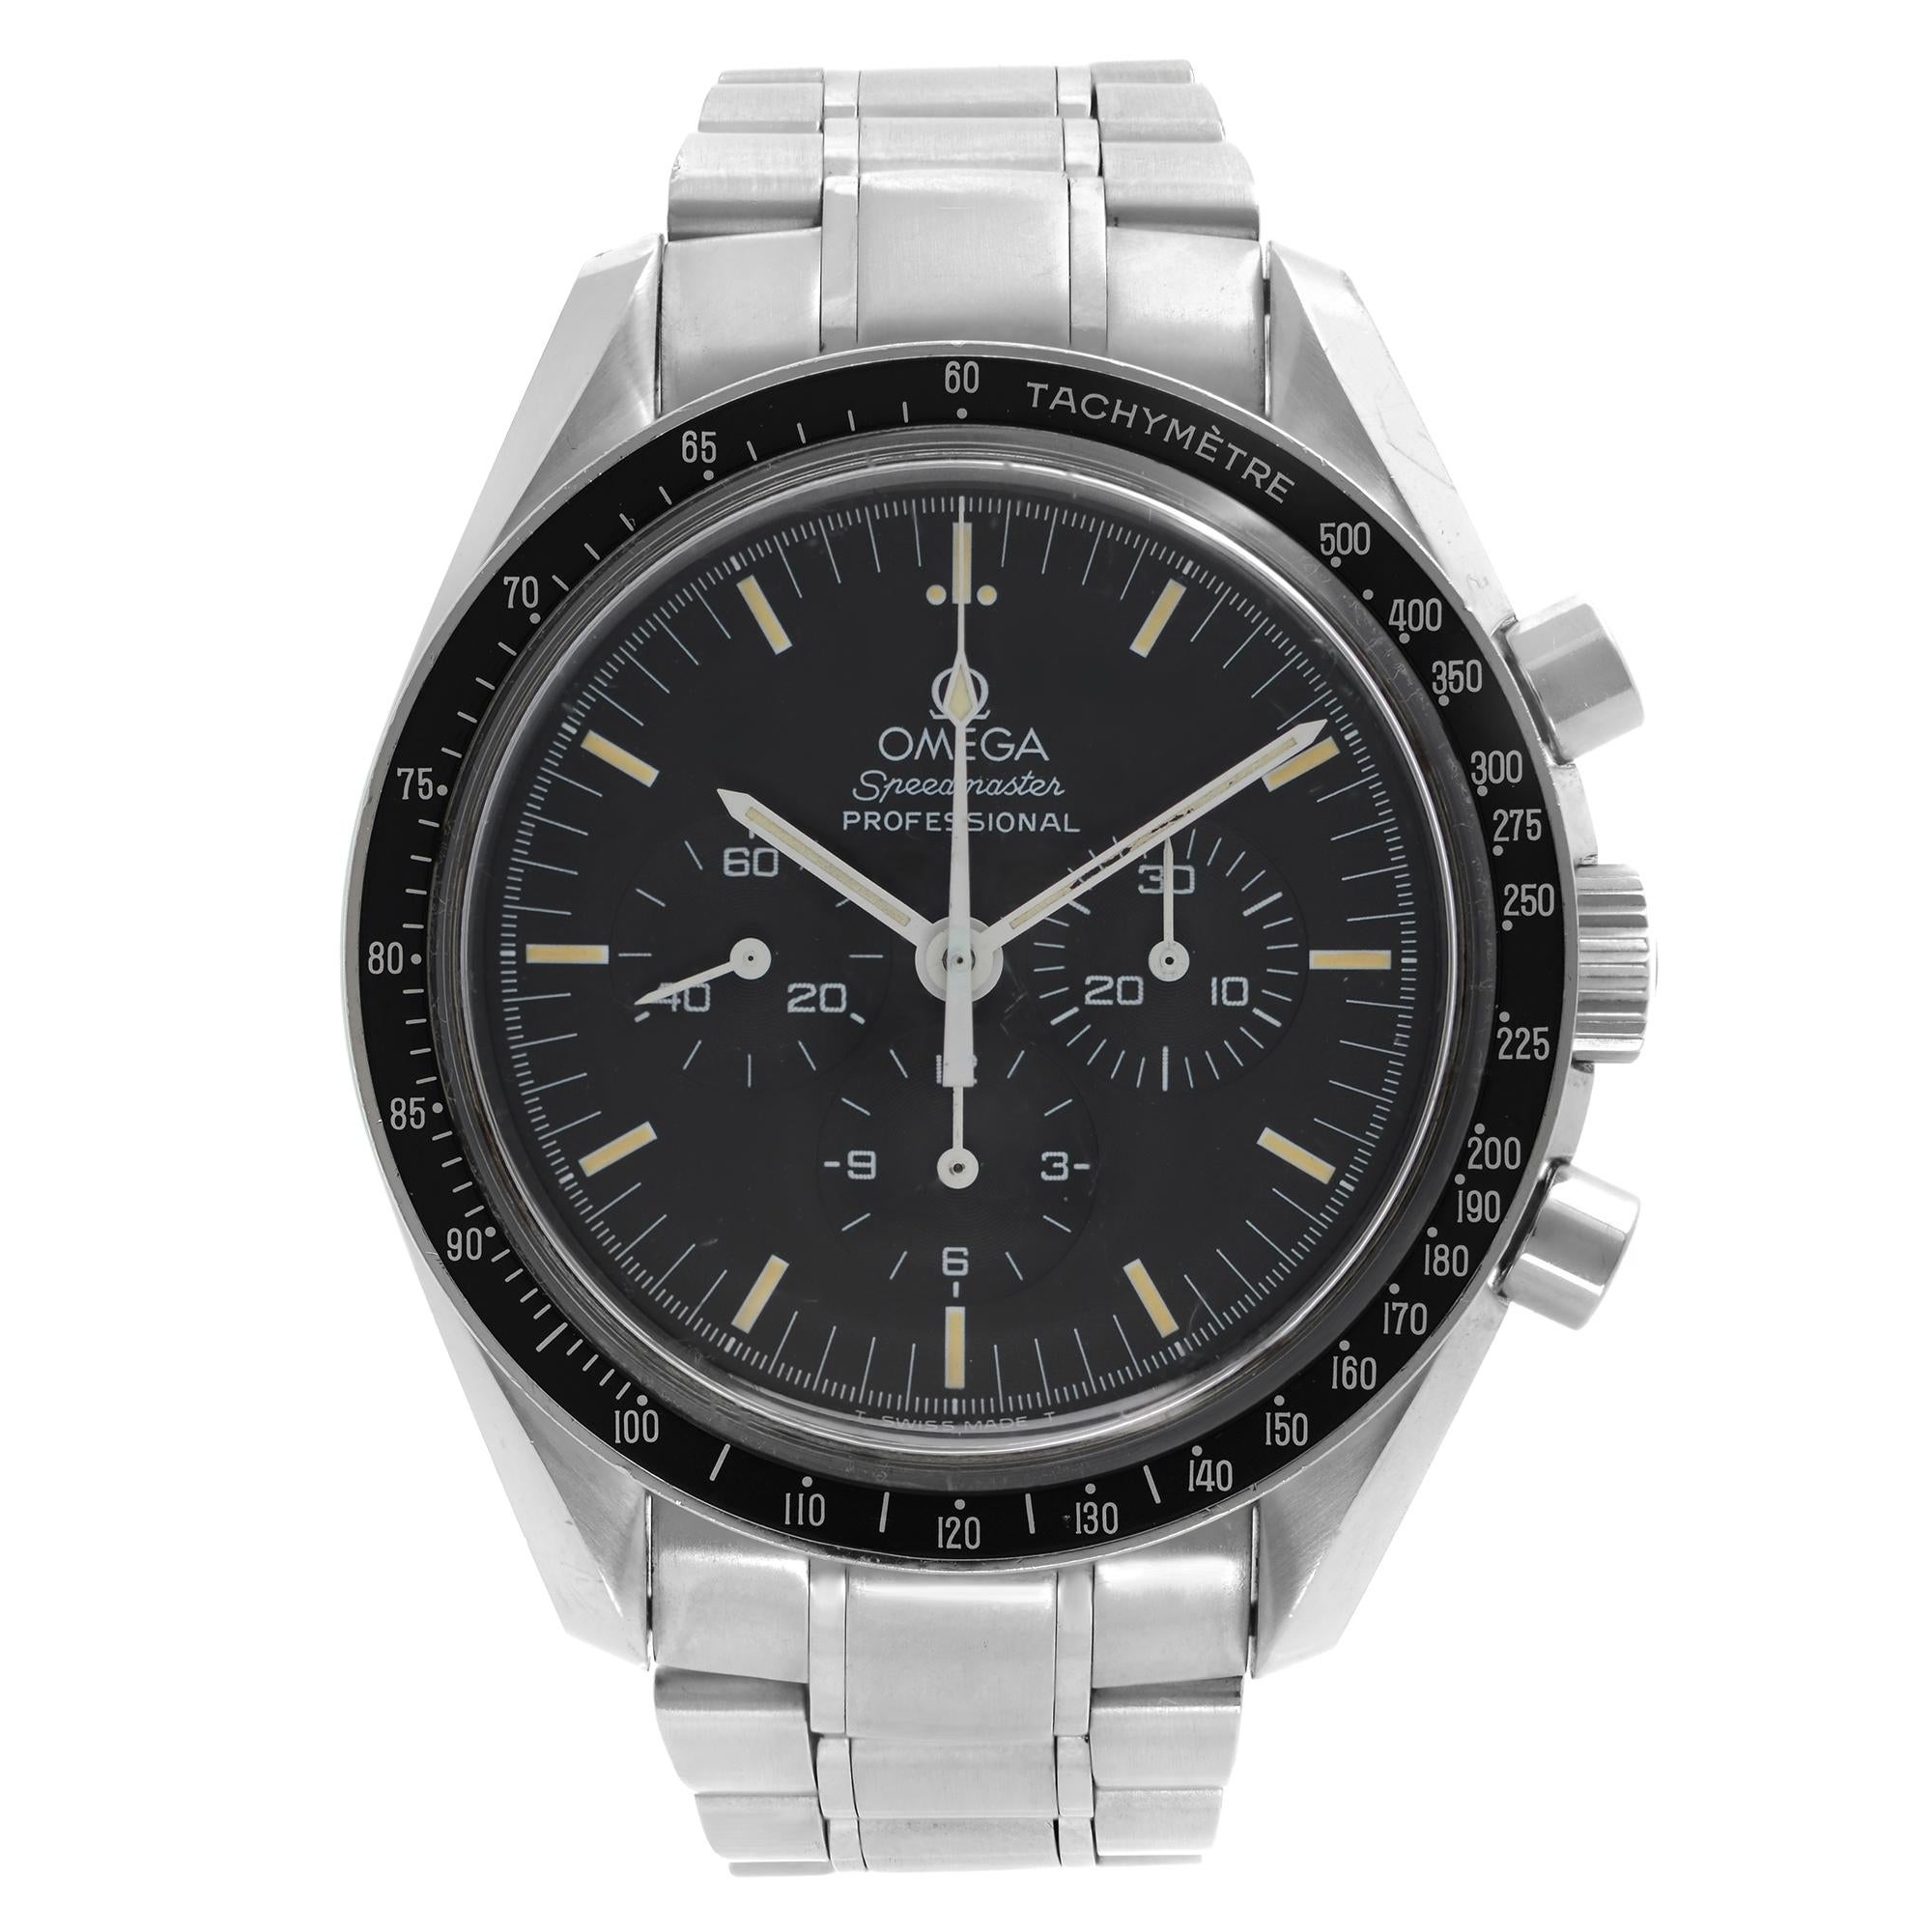 Vintage Omega Speedmaster Moonwatch Black Dial Hand Wind Watch 345.0022.100 For Sale